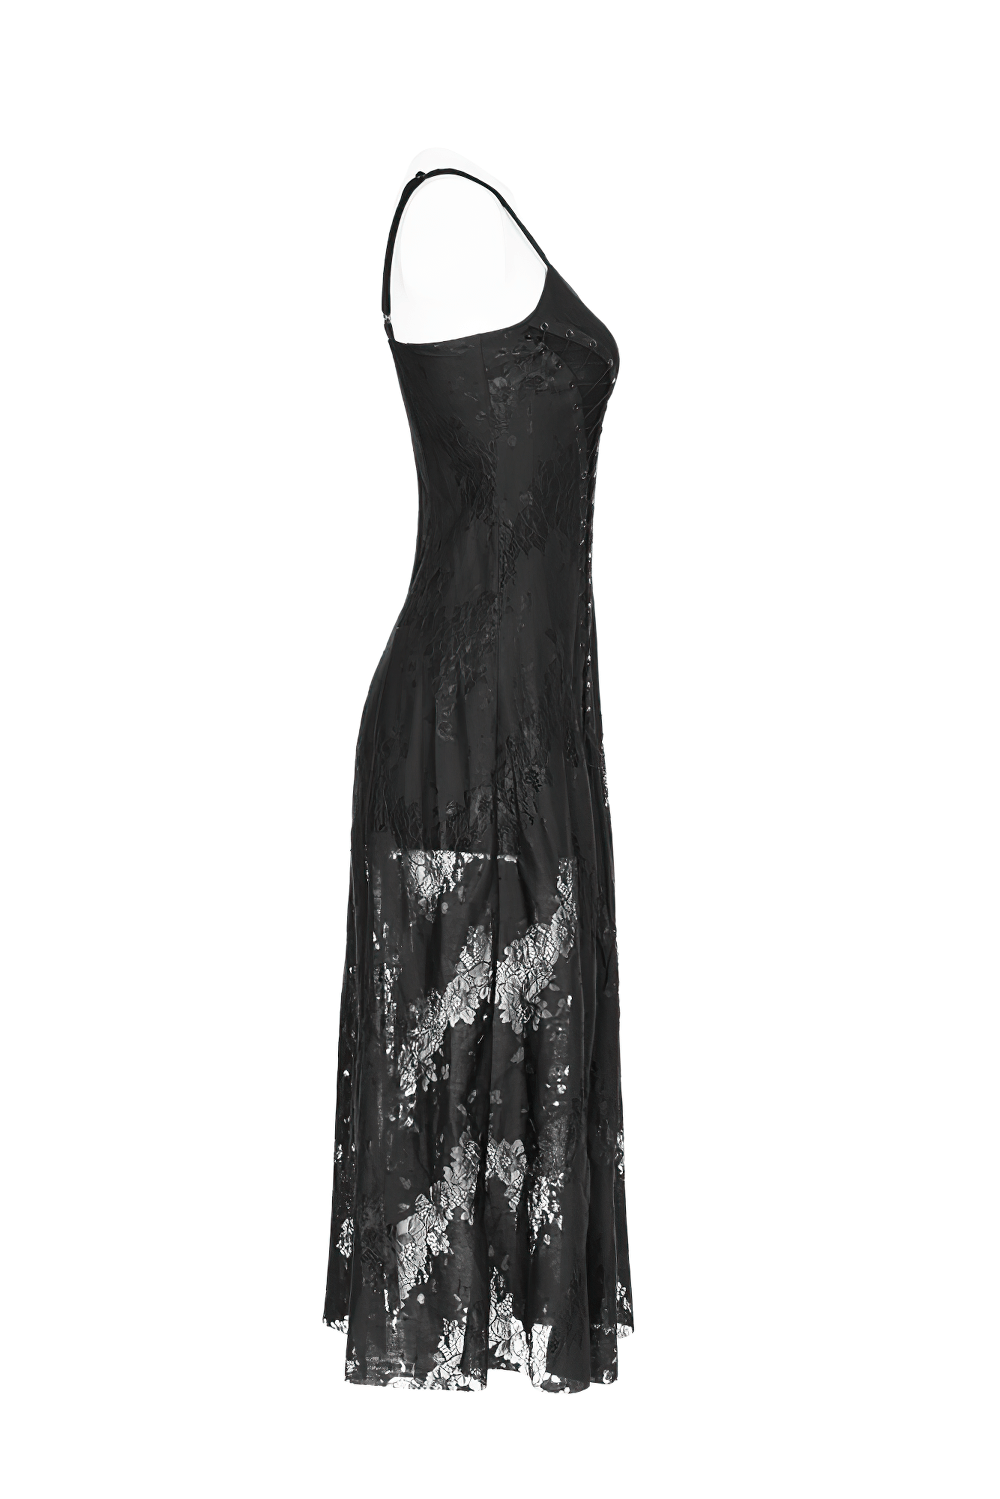 Elegant Dark Gothic Lace Strap Backless Dress